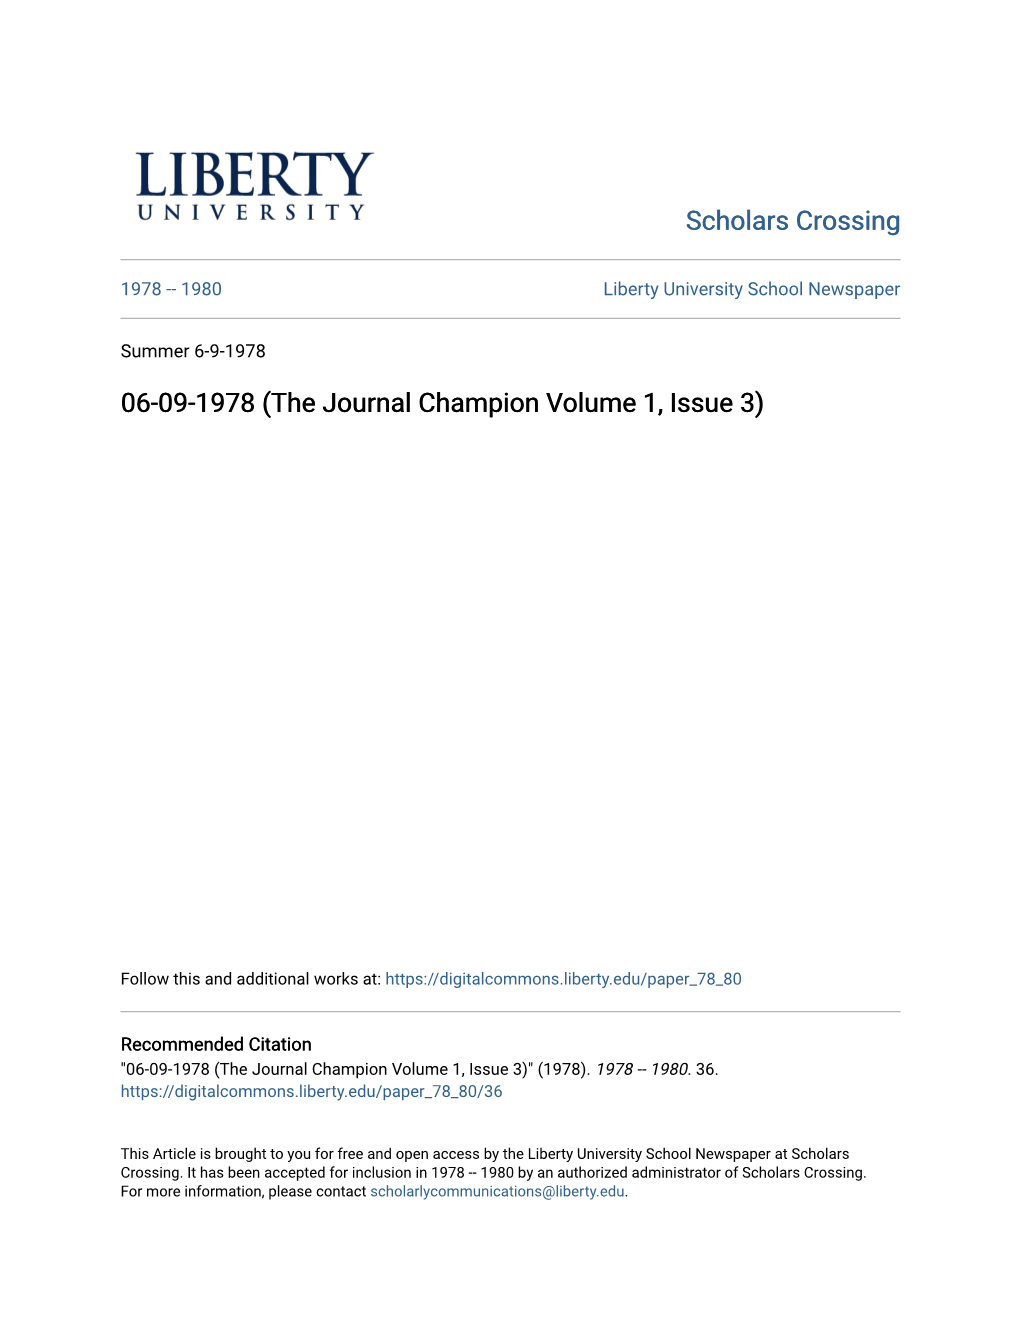 The Journal Champion Volume 1, Issue 3)